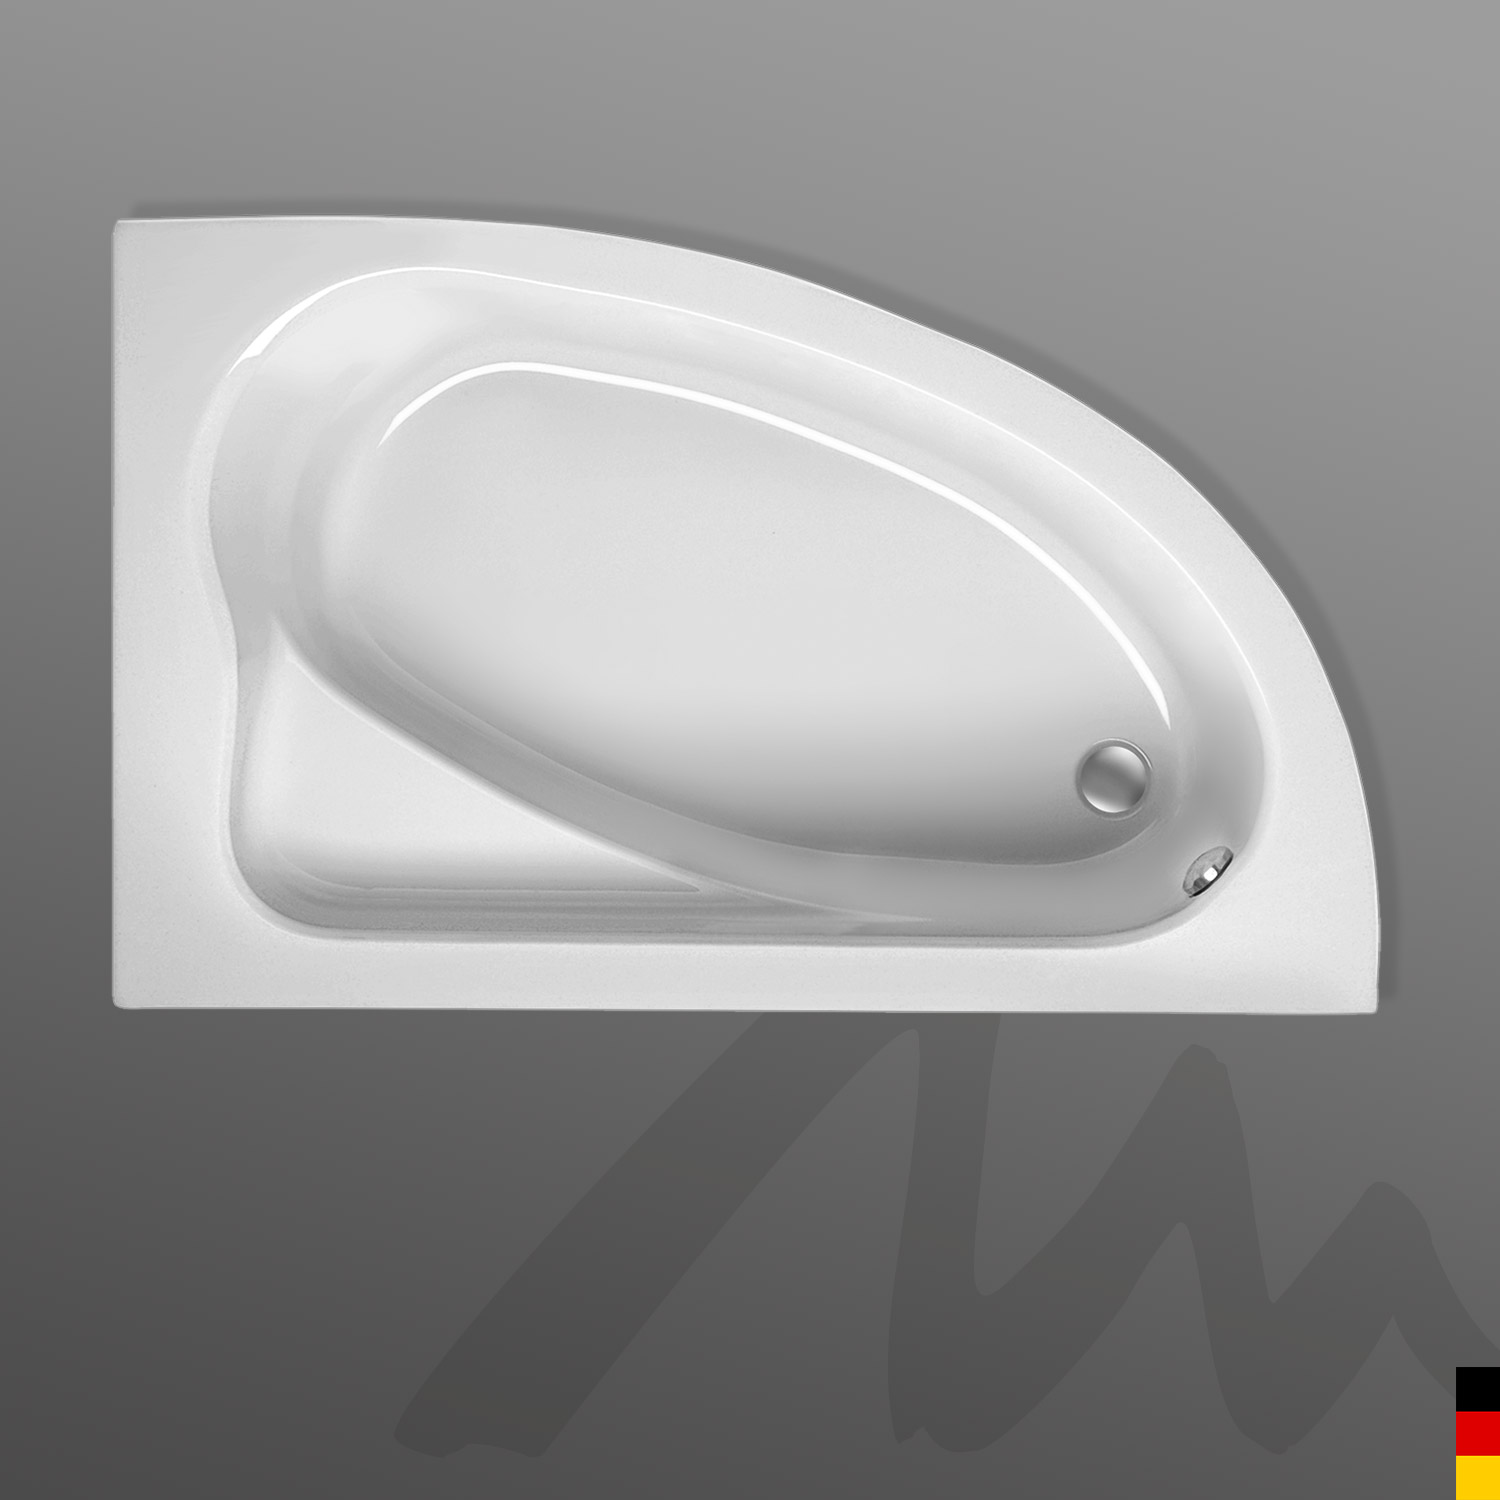 Mauersberger Badewanne Eckwanne Aspera 170/100 Ausführung links  170x100x45cm  Farbe:weiß